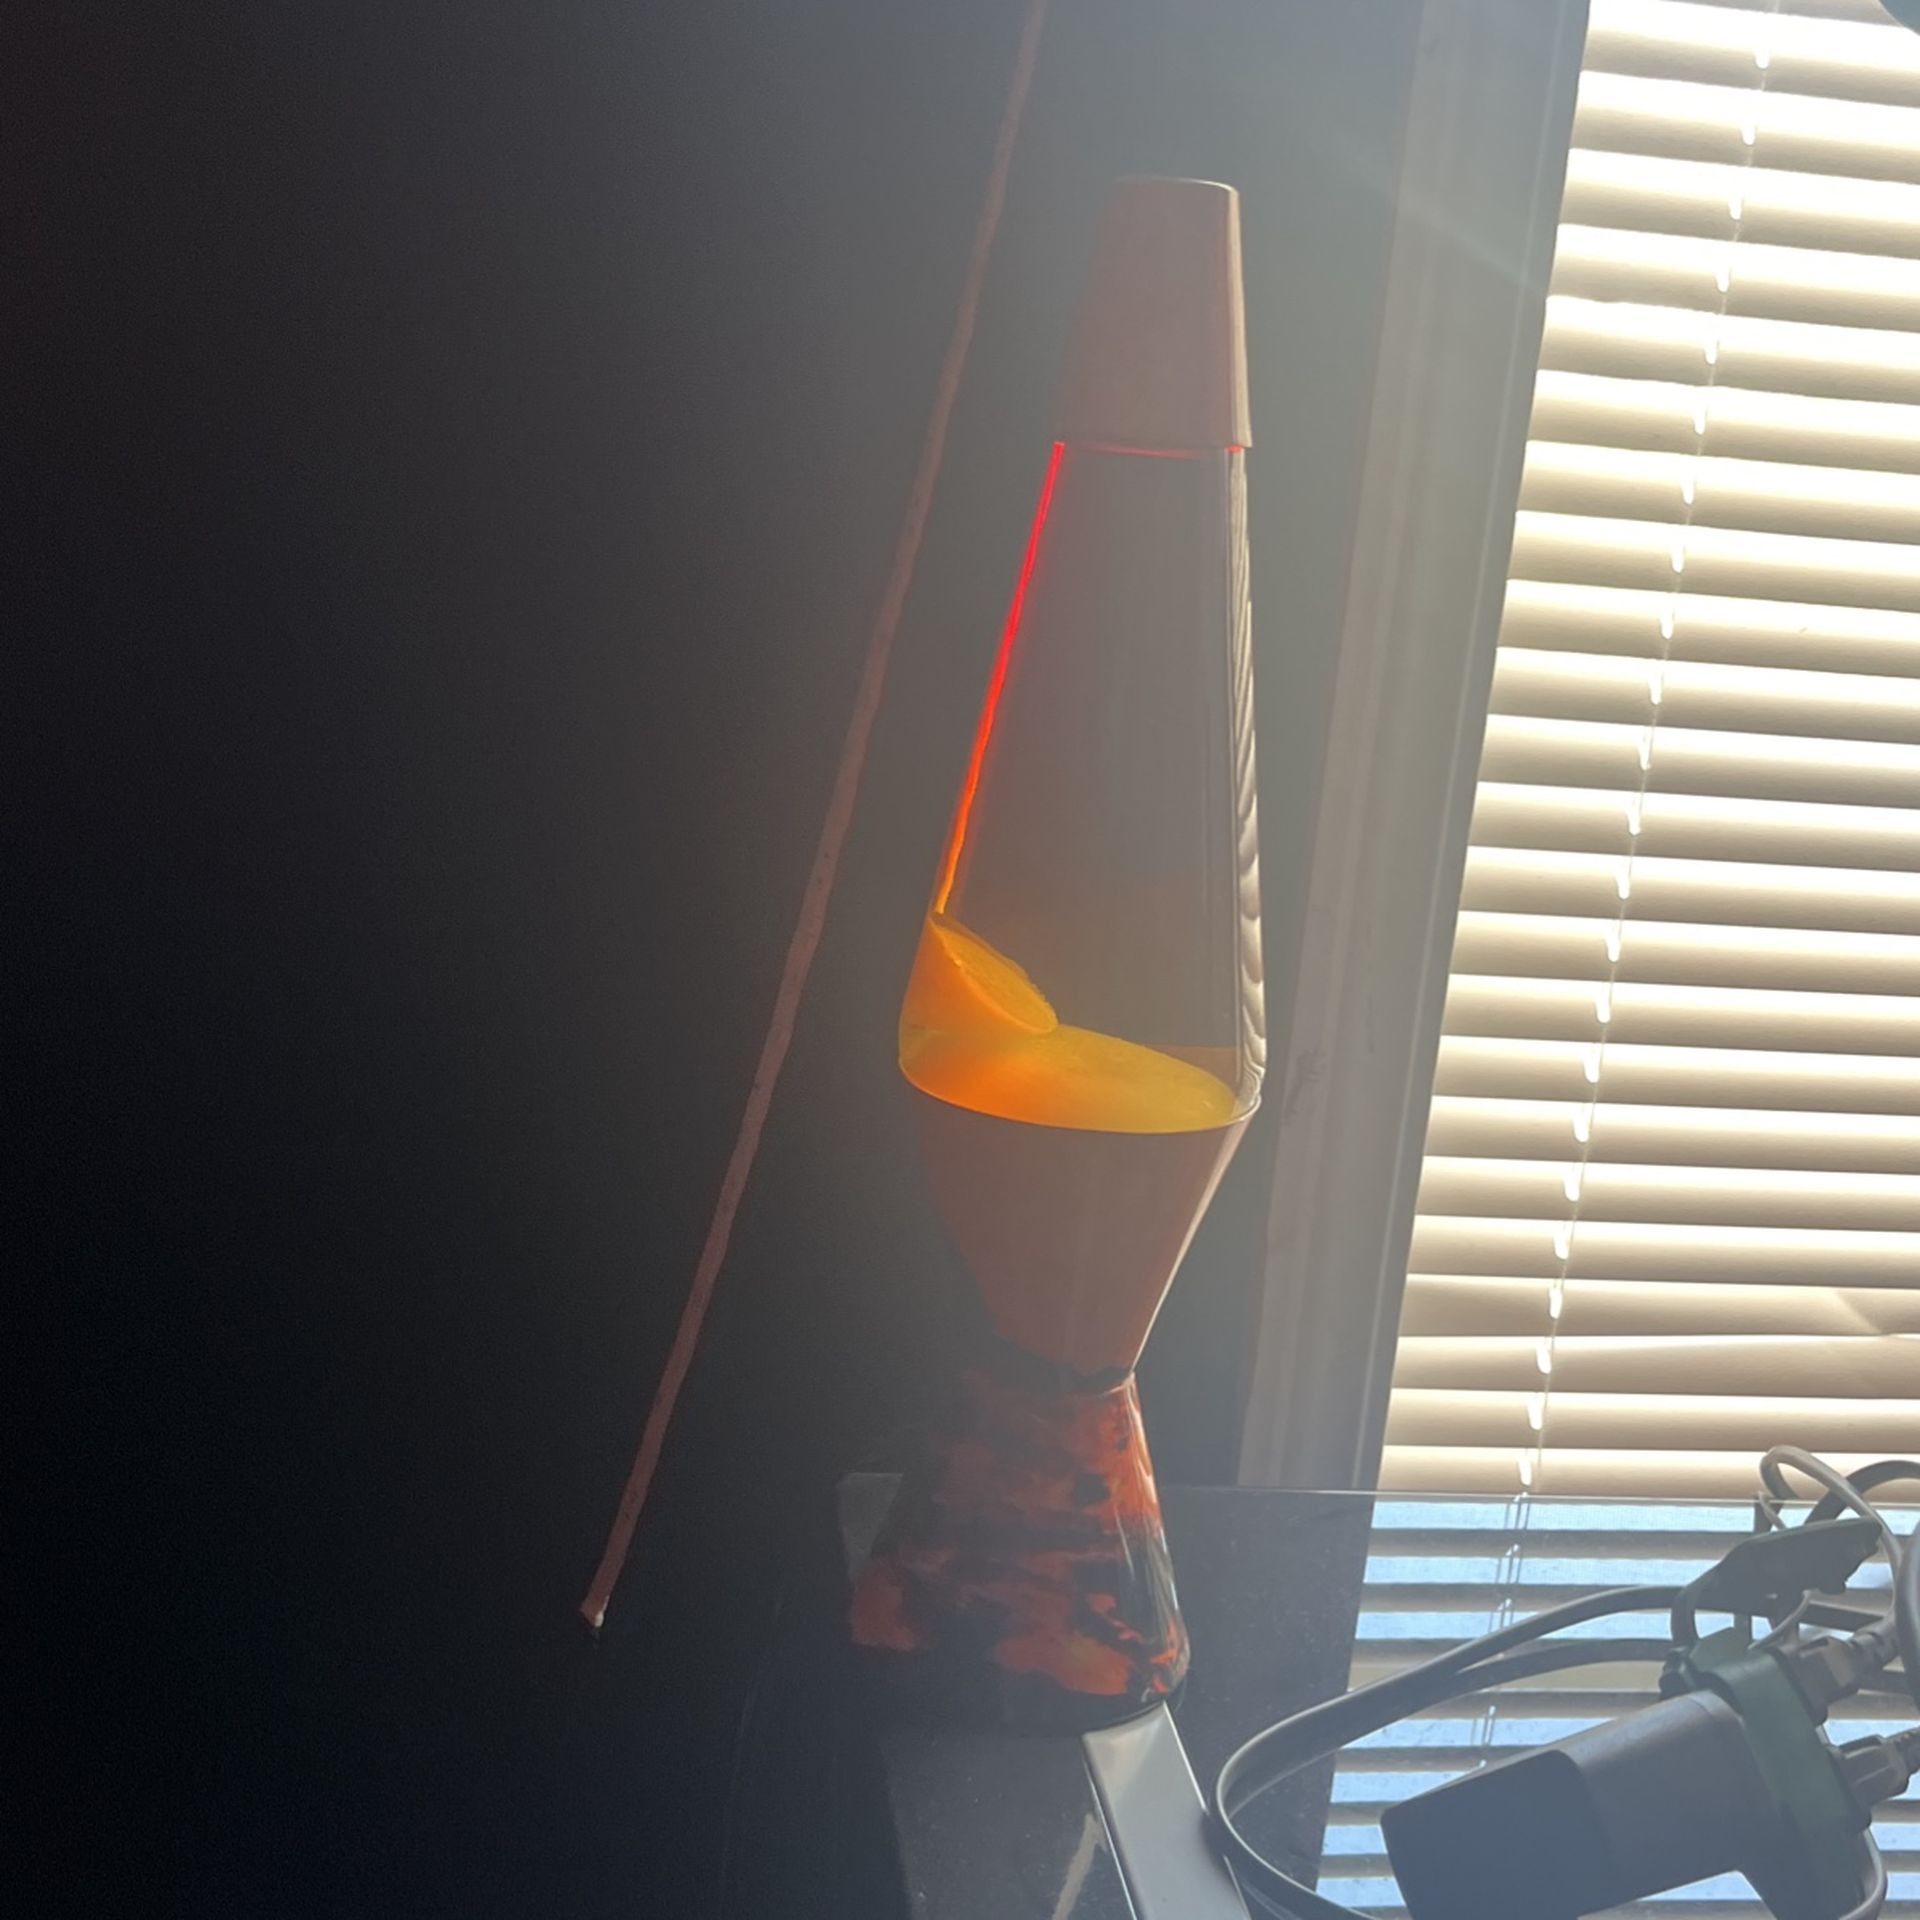 Volcano Lamp